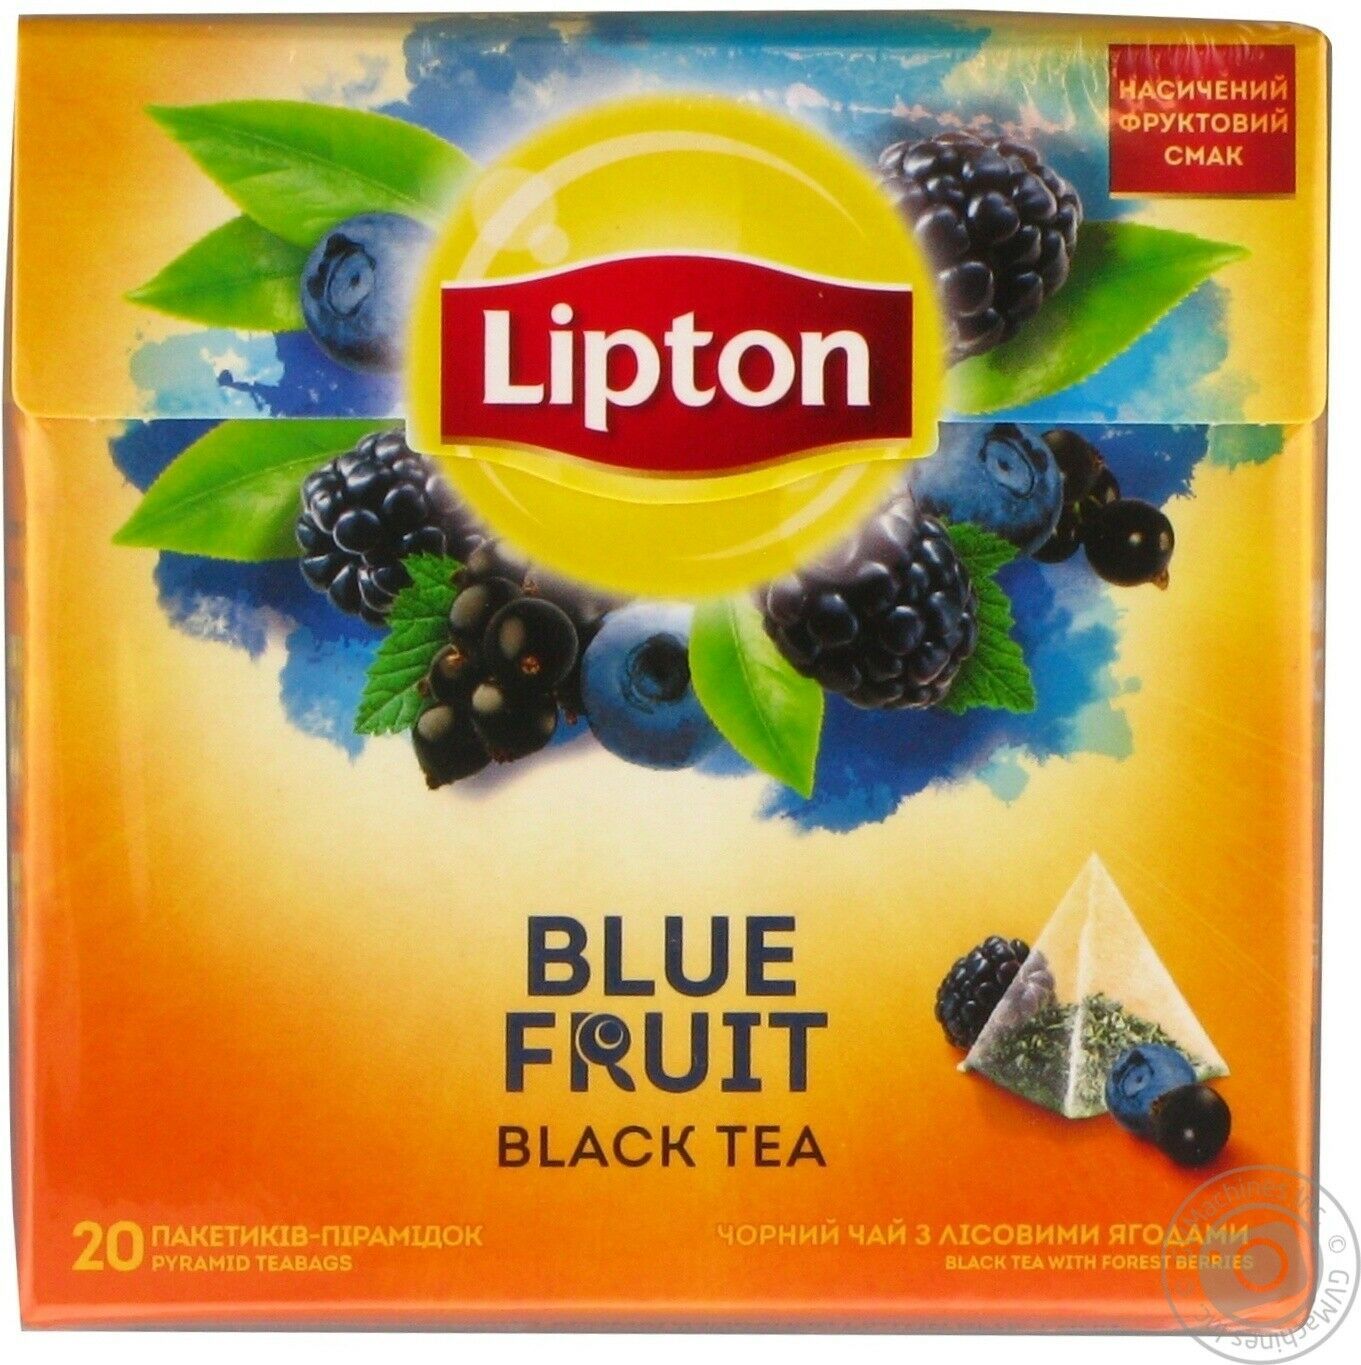 Lipton Black Tea: Blue Fruit-1 box/ 20 tea bags -FREE SHIPPING DaMaGeD